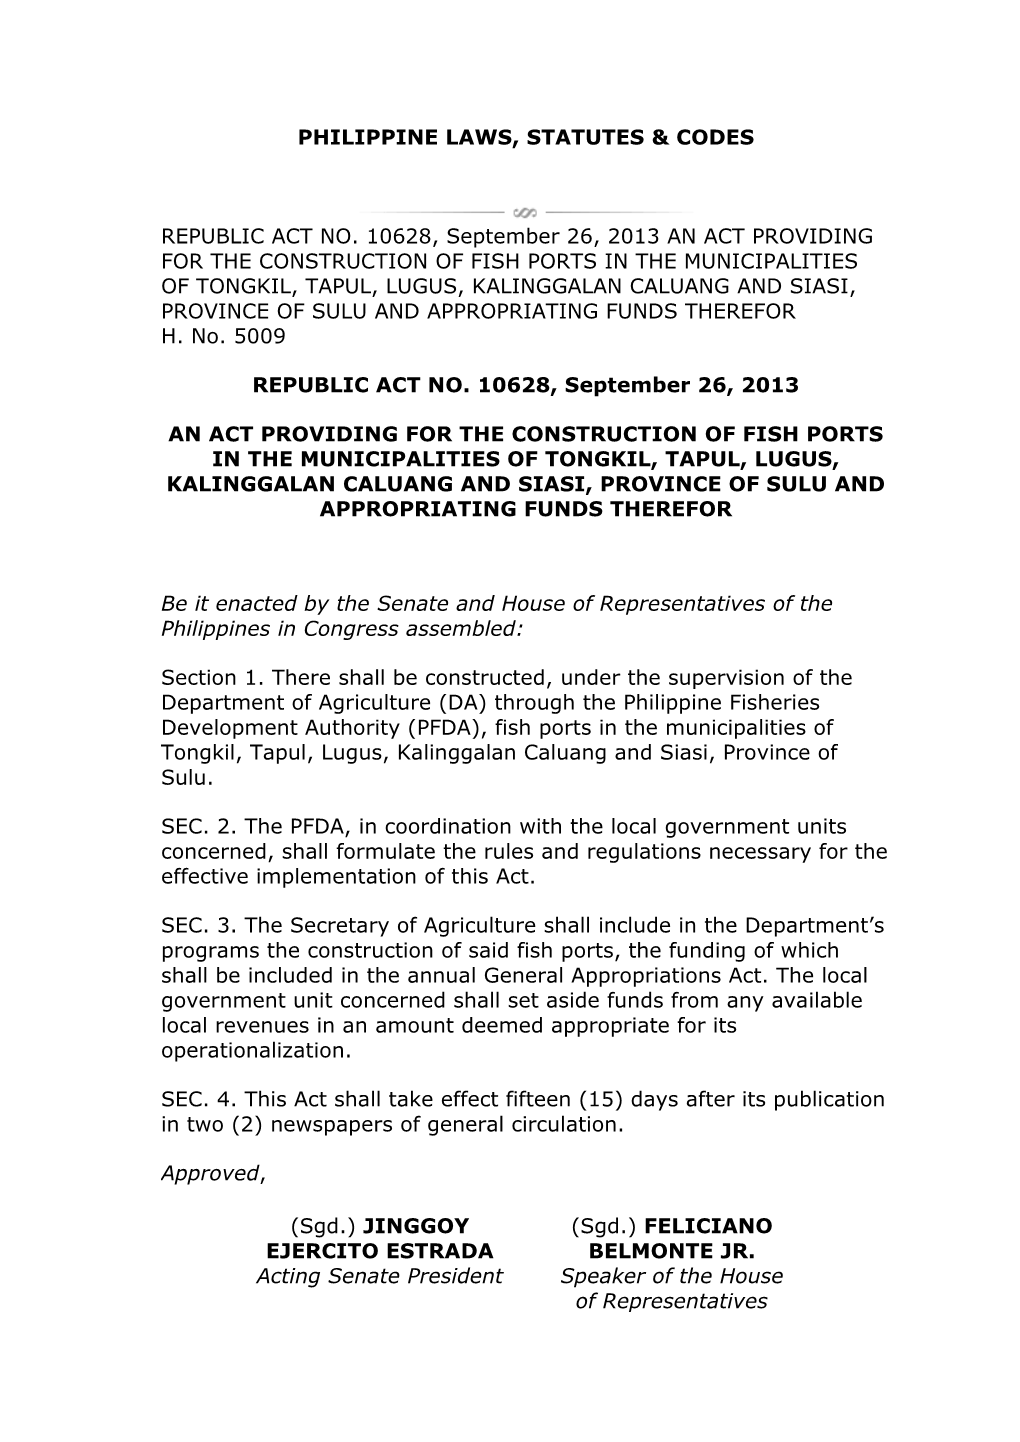 Philippine Laws, Statutes & Codes Republic Act No